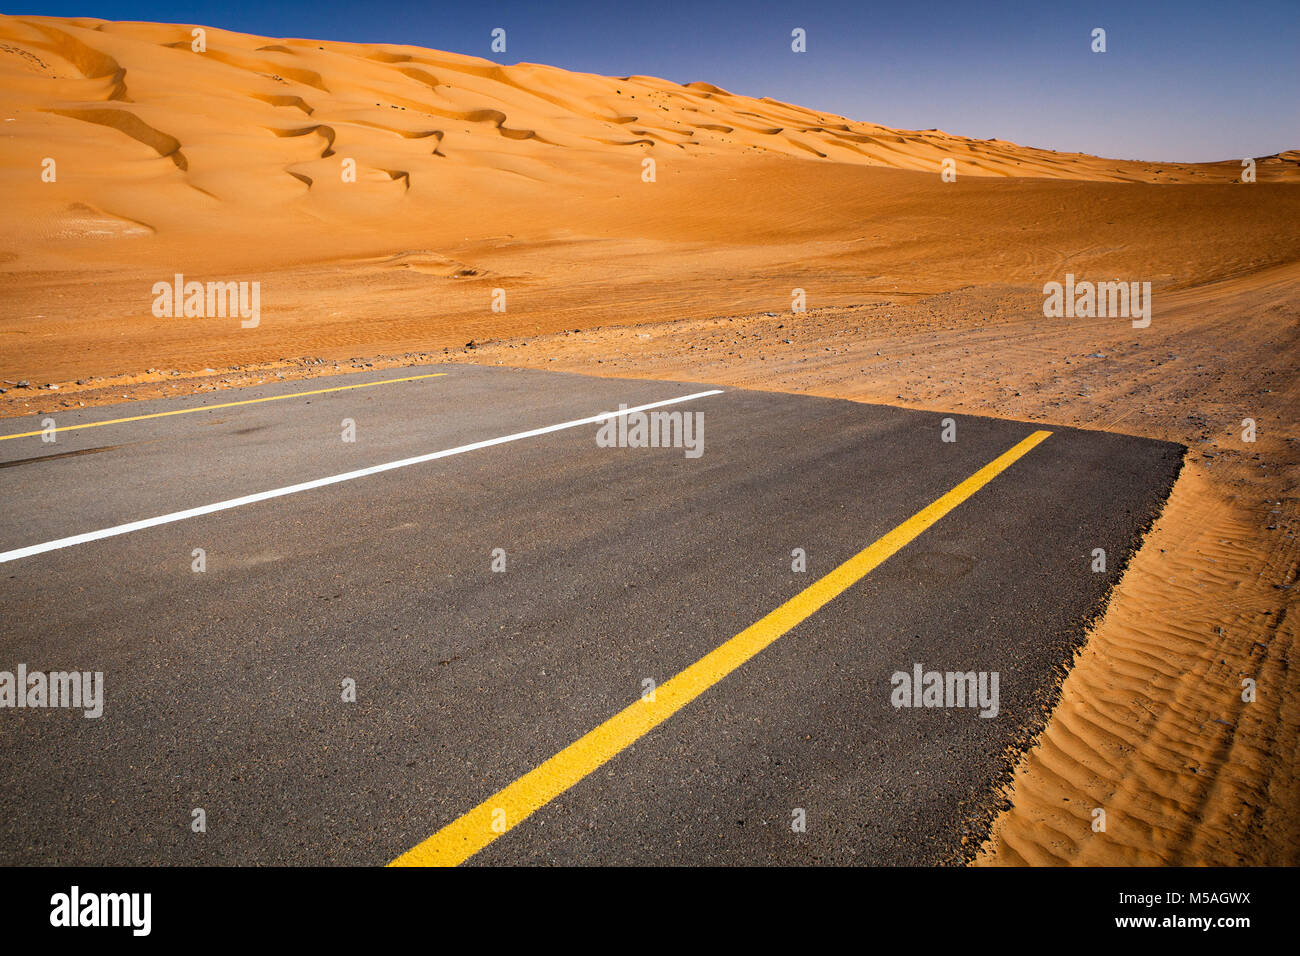 Moderne versus Natur Konzept - Ende der Zivilisation, Beginn der Wüste. Moderne asphaltierte Straße landet in Sanddünen. Stockfoto